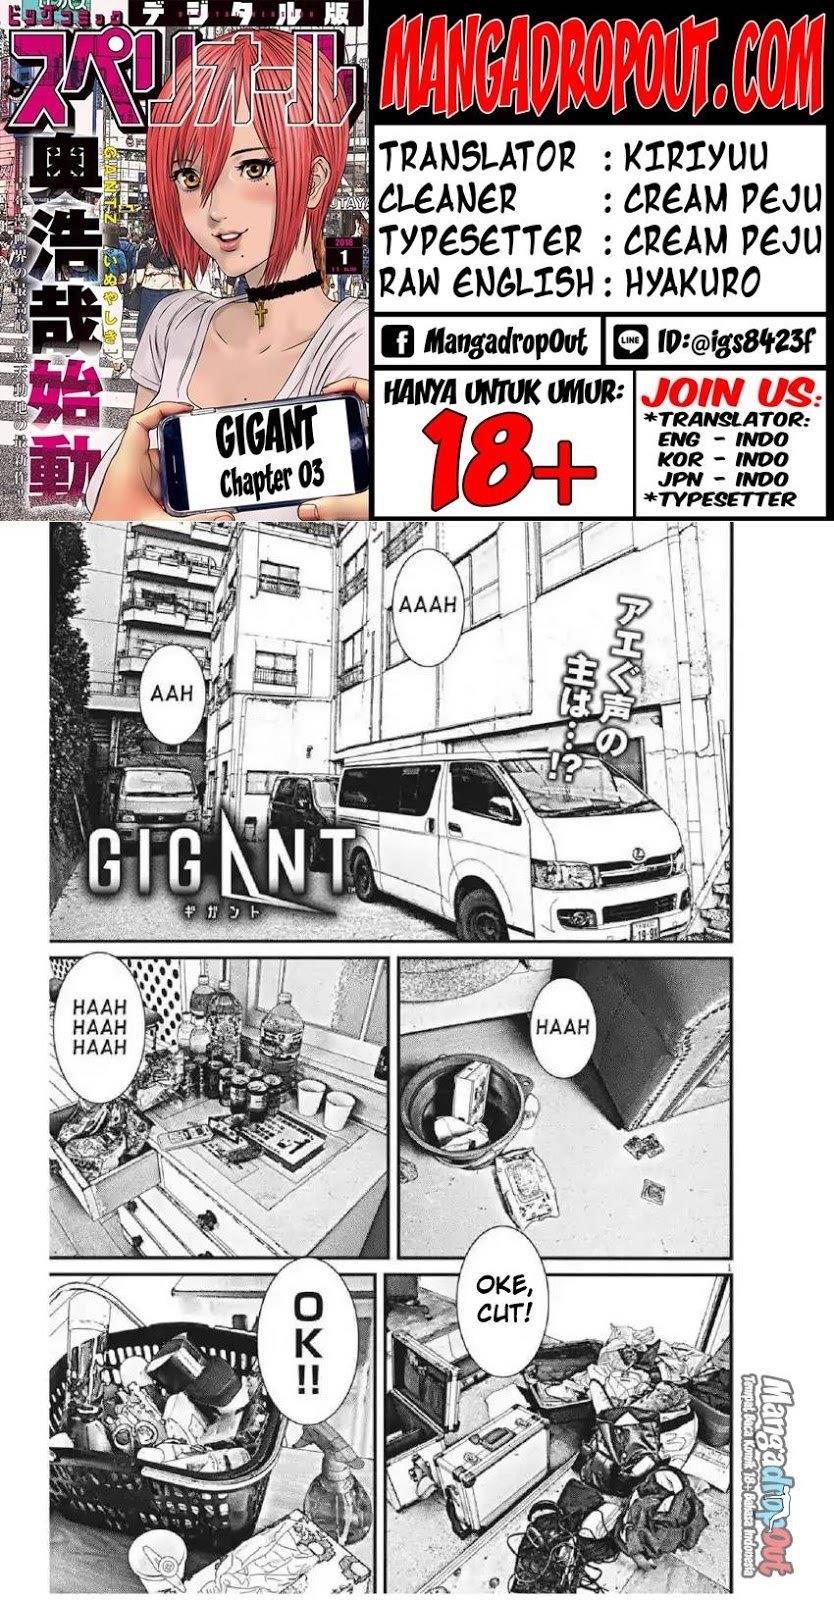 GIGANT Chapter 3